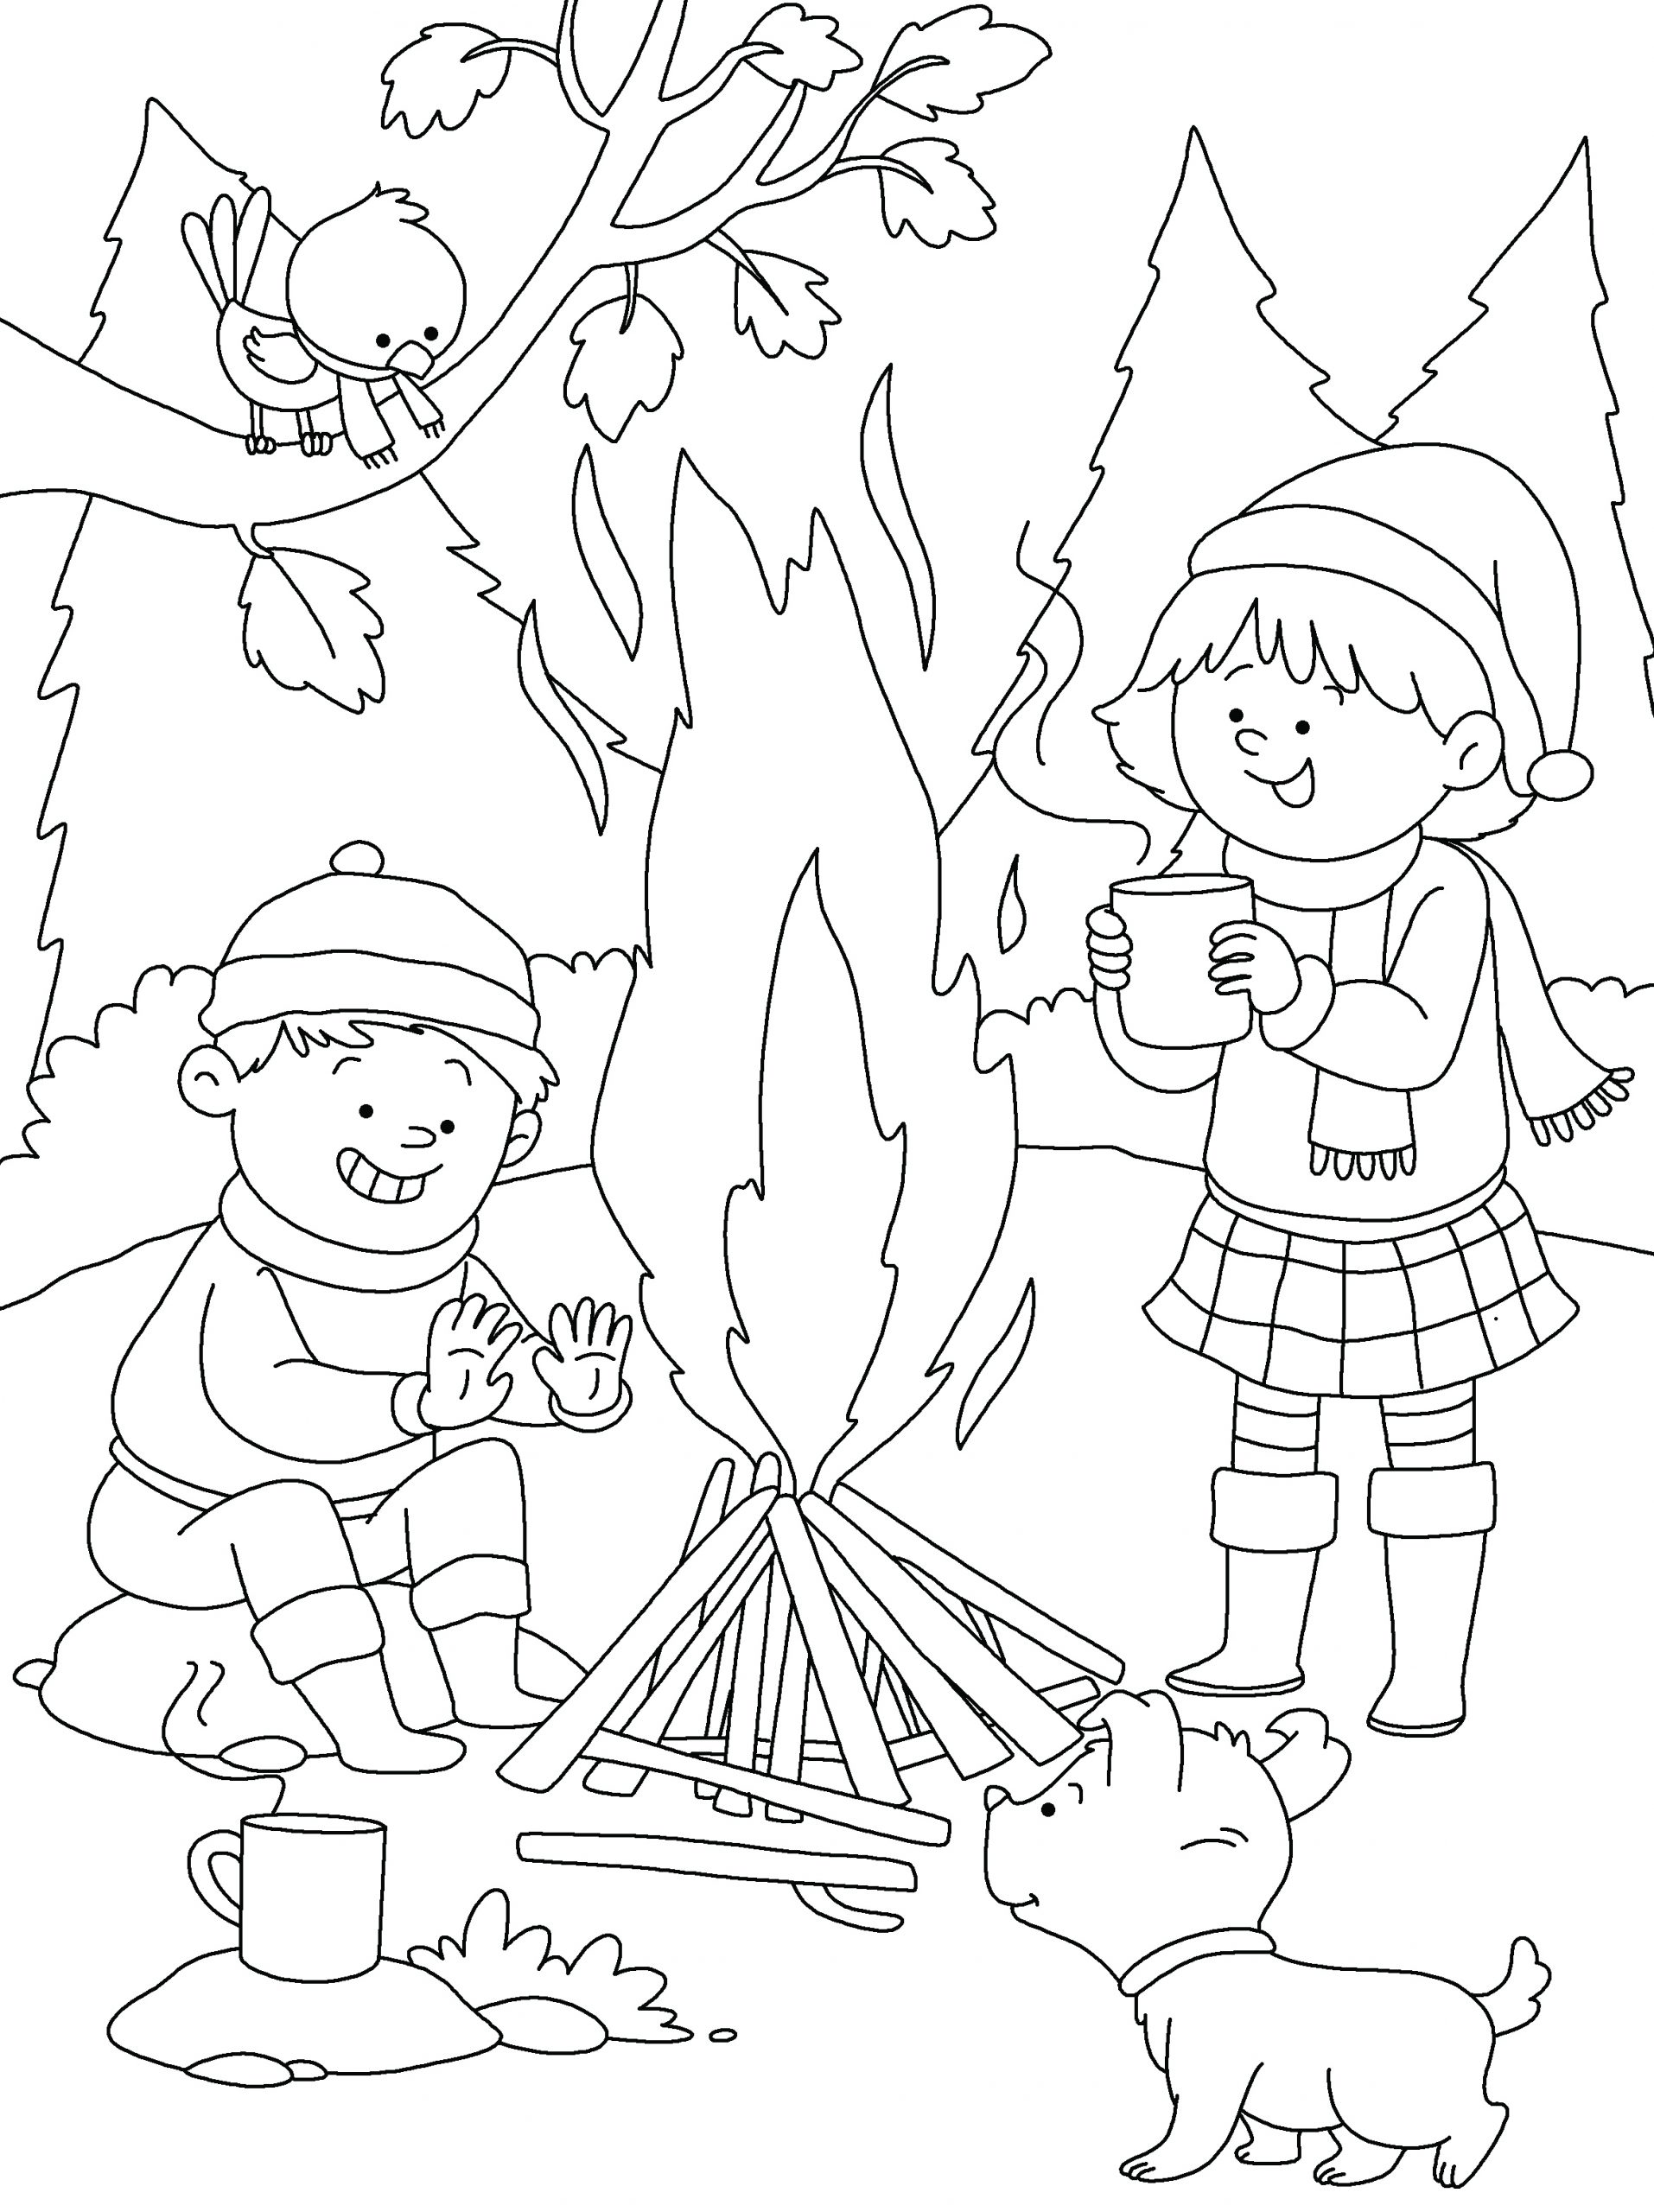 Winter season drawing by kids.. - BRIS International School | Facebook-saigonsouth.com.vn